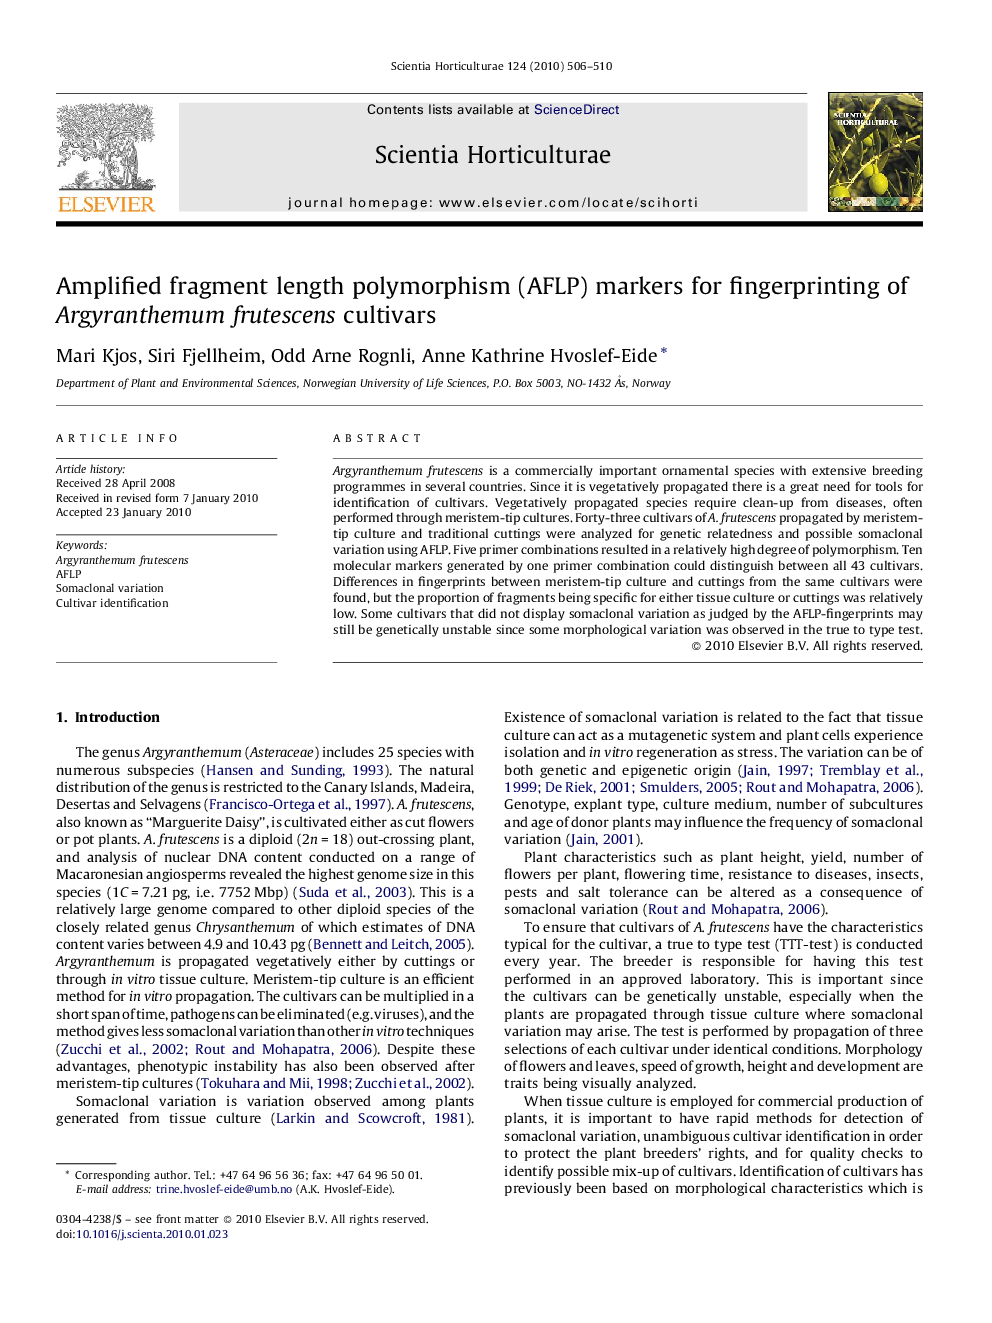 Amplified fragment length polymorphism (AFLP) markers for fingerprinting of Argyranthemum frutescens cultivars